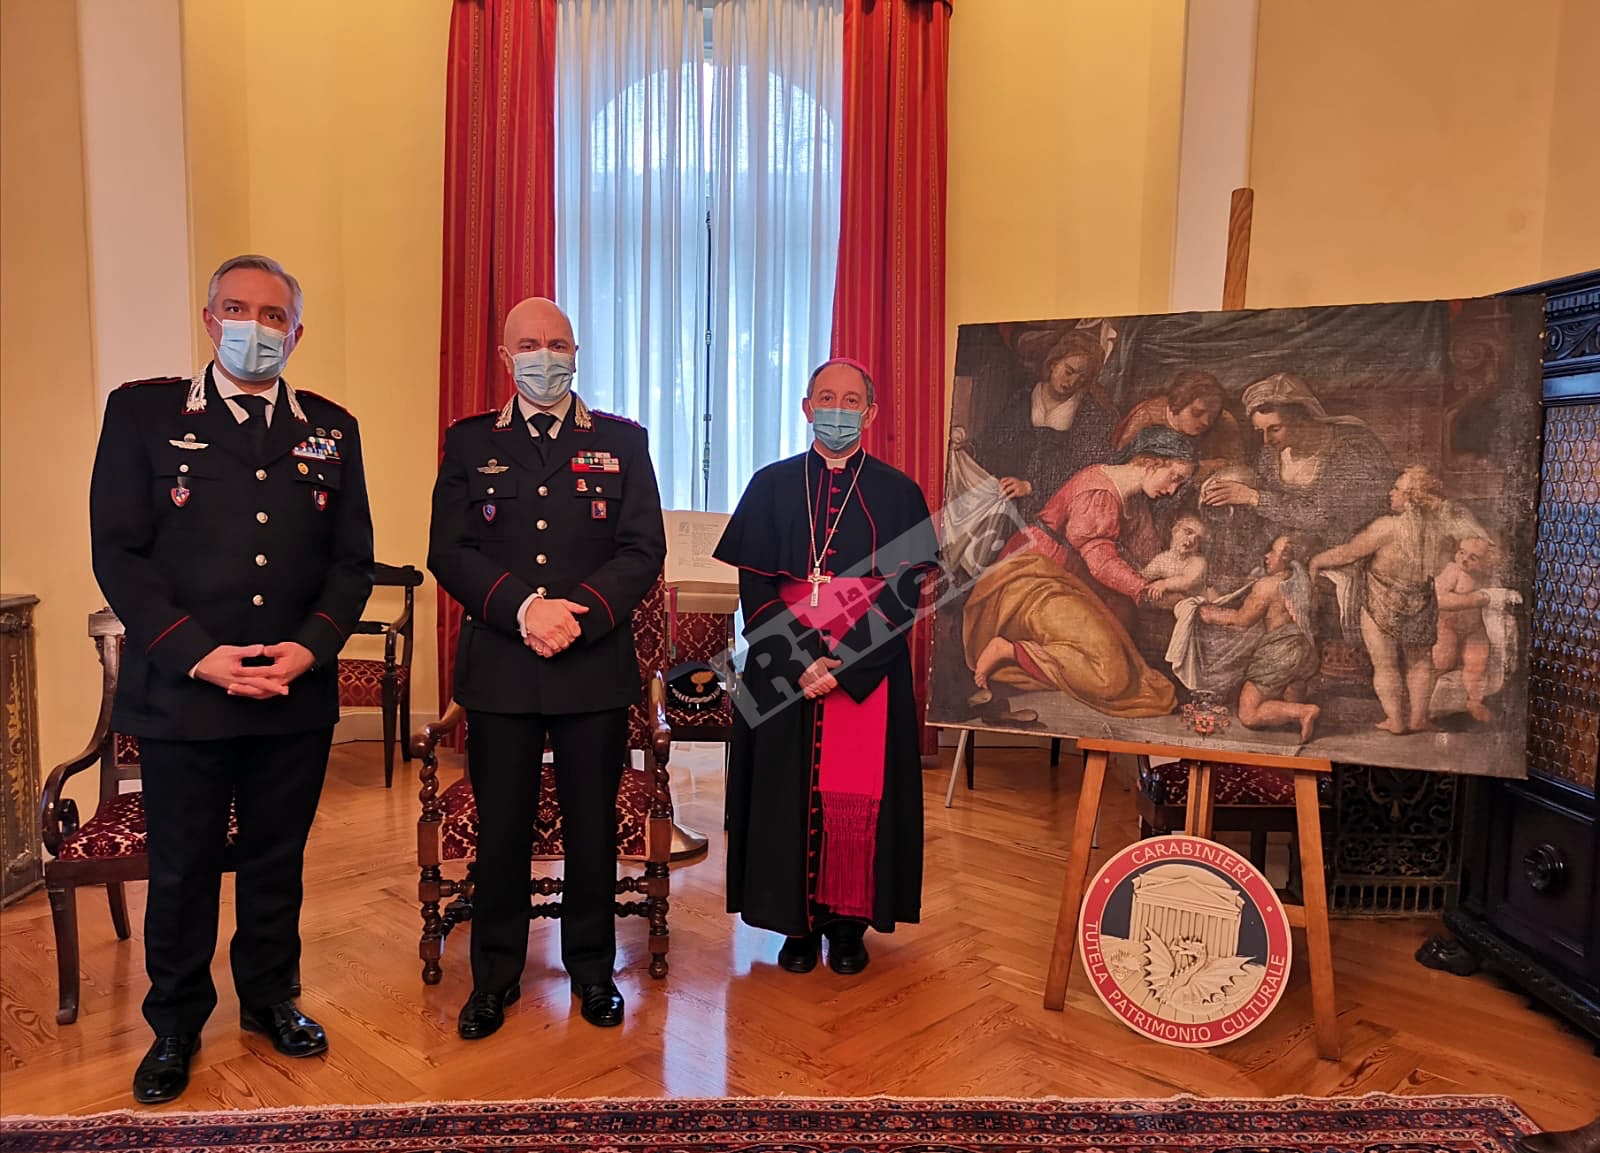 Diocesi-Pala-daltare-Madonna-vescovo-Suetta-carabinieri_04